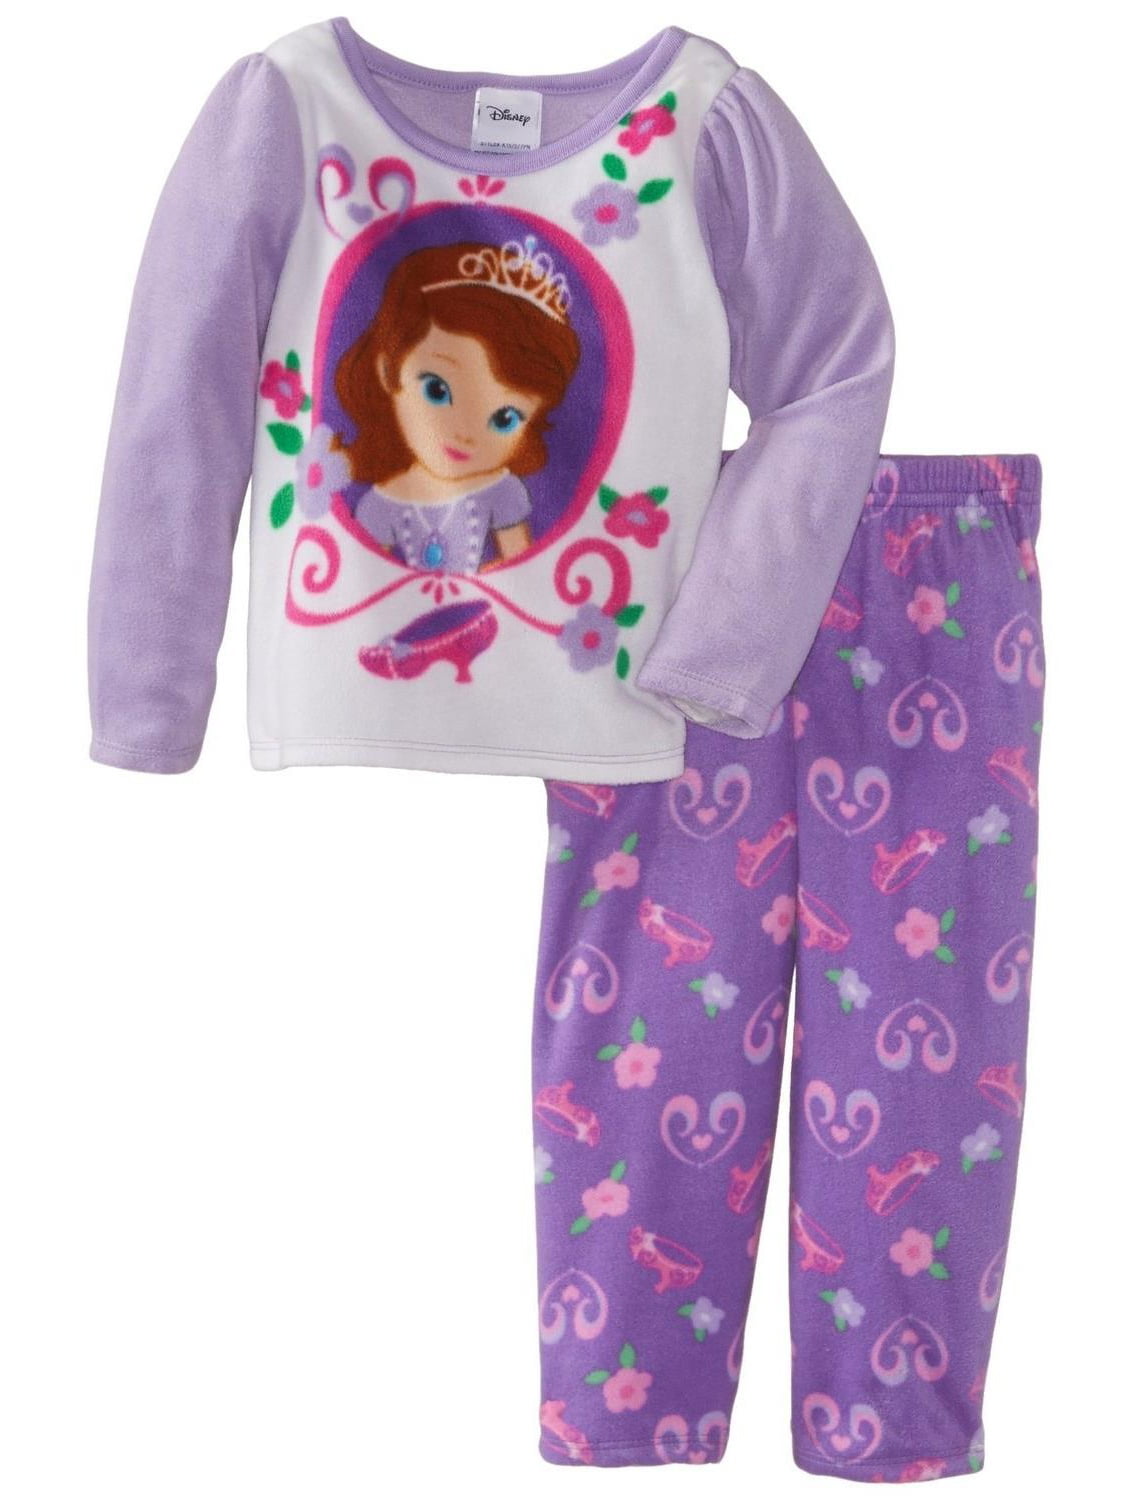 Magic Castle Pink Fleece Pajama Sleeper Disney Princess Size 24 Months Aurora